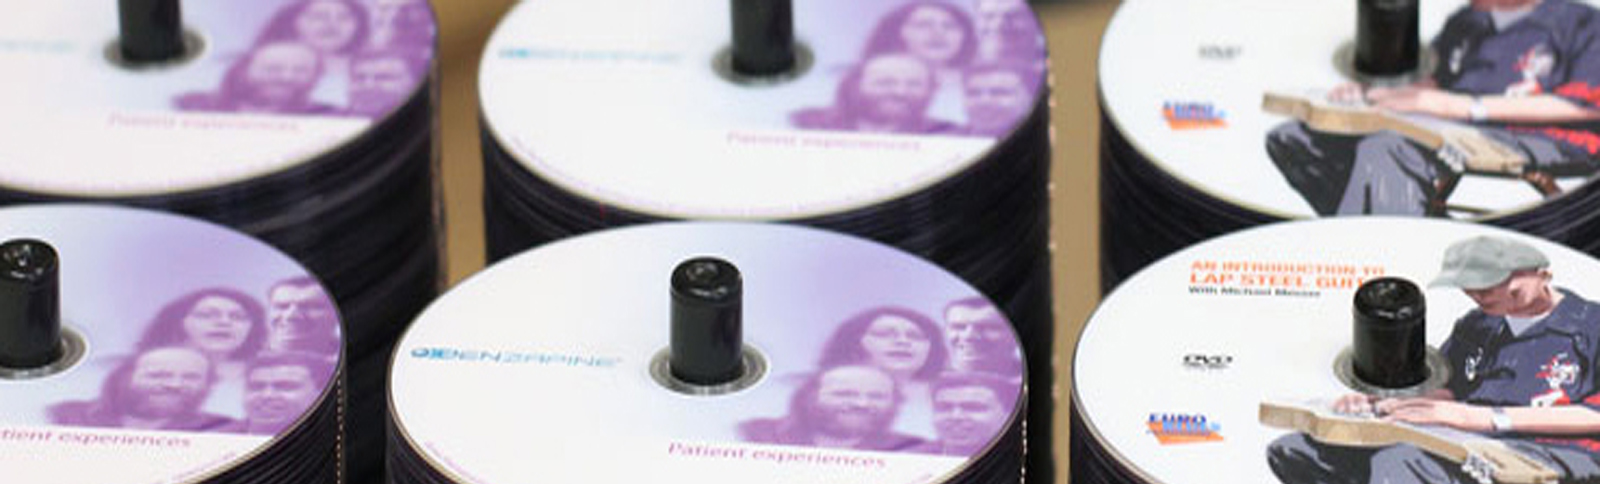 CD Duplication DVD Duplication Oxfordshire UK